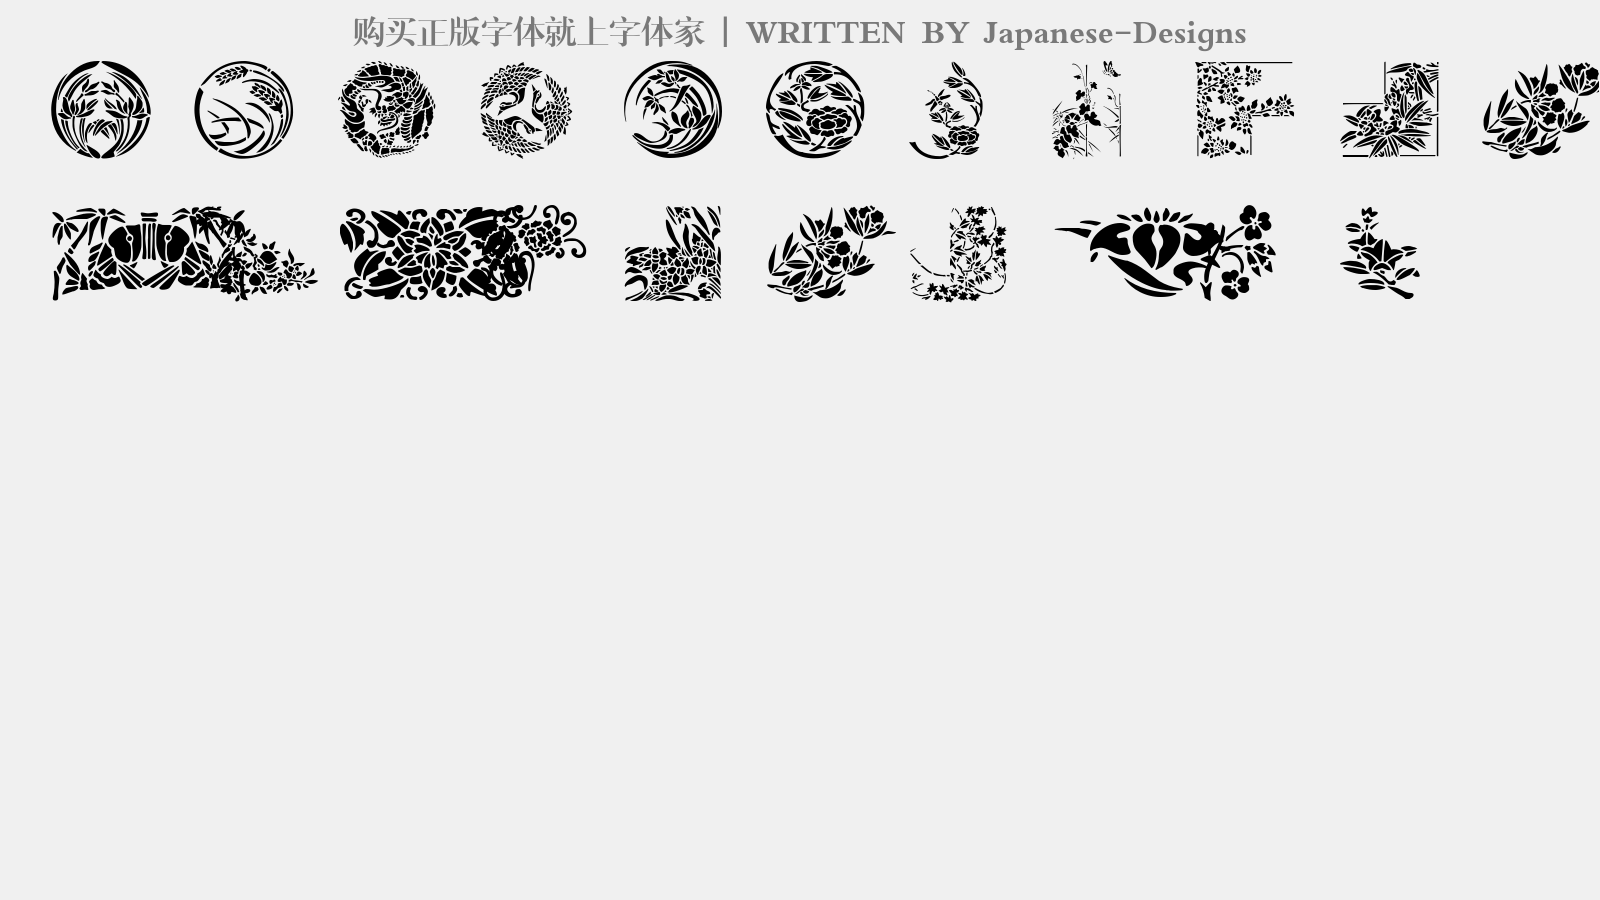 Japanese-Designs - 大写字母/小写字母/数字